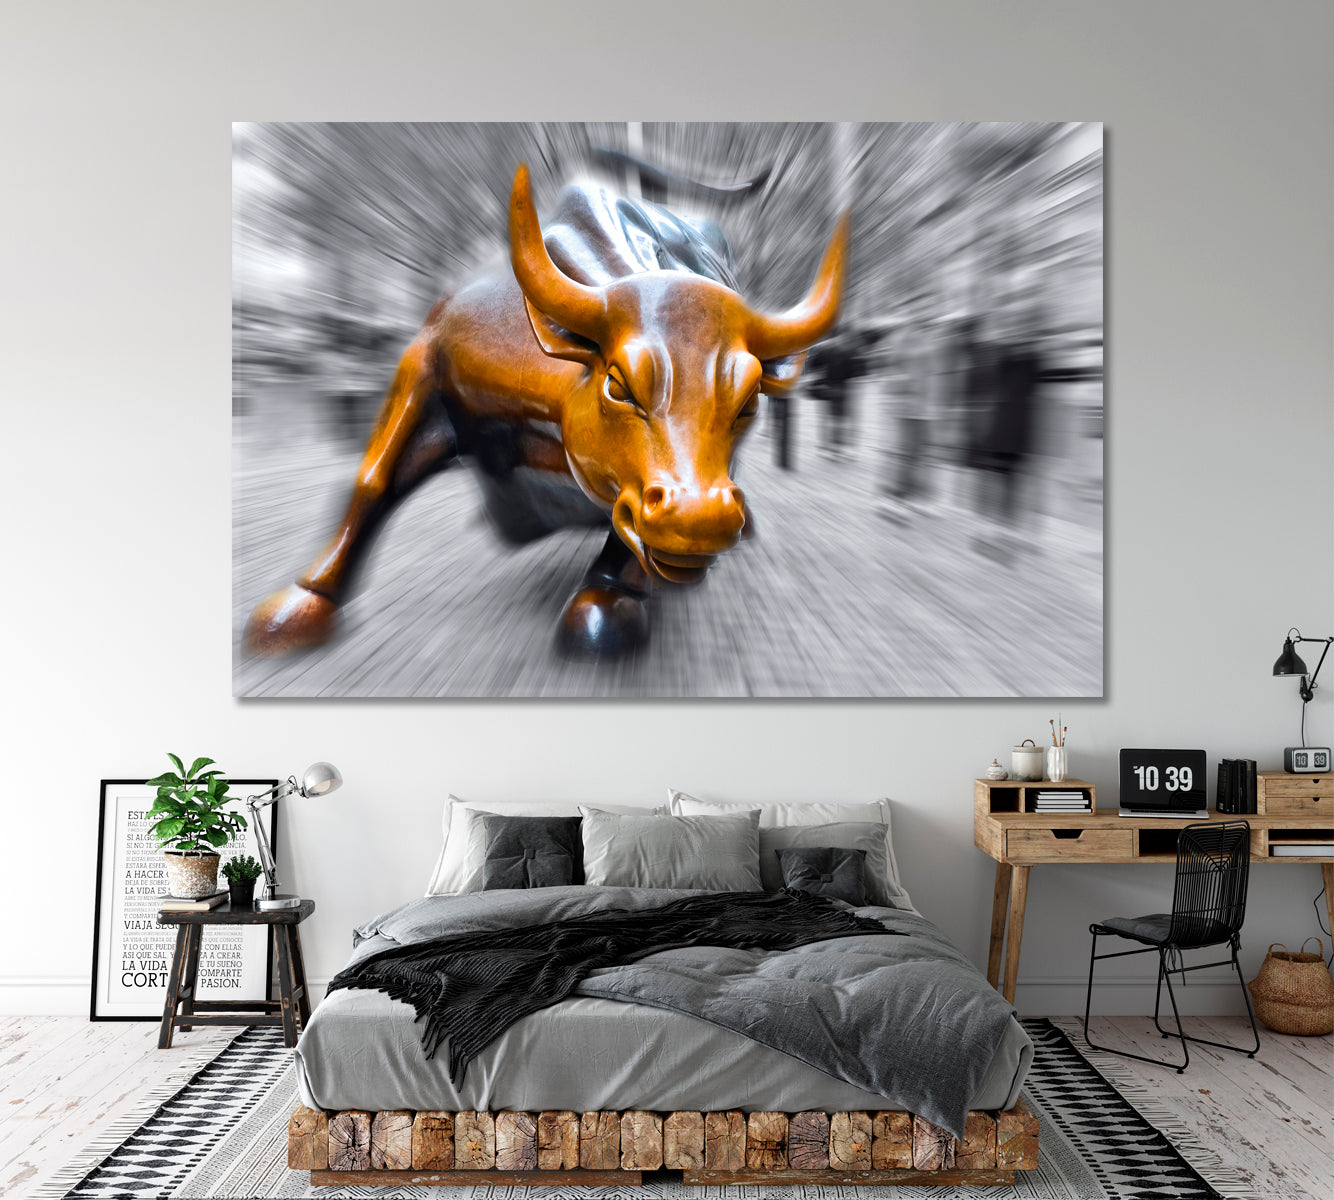 Charging Bull symbol of the New York NEW YORK CITY NY USA Cities Wall Art Artesty 1 panel 24" x 16" 